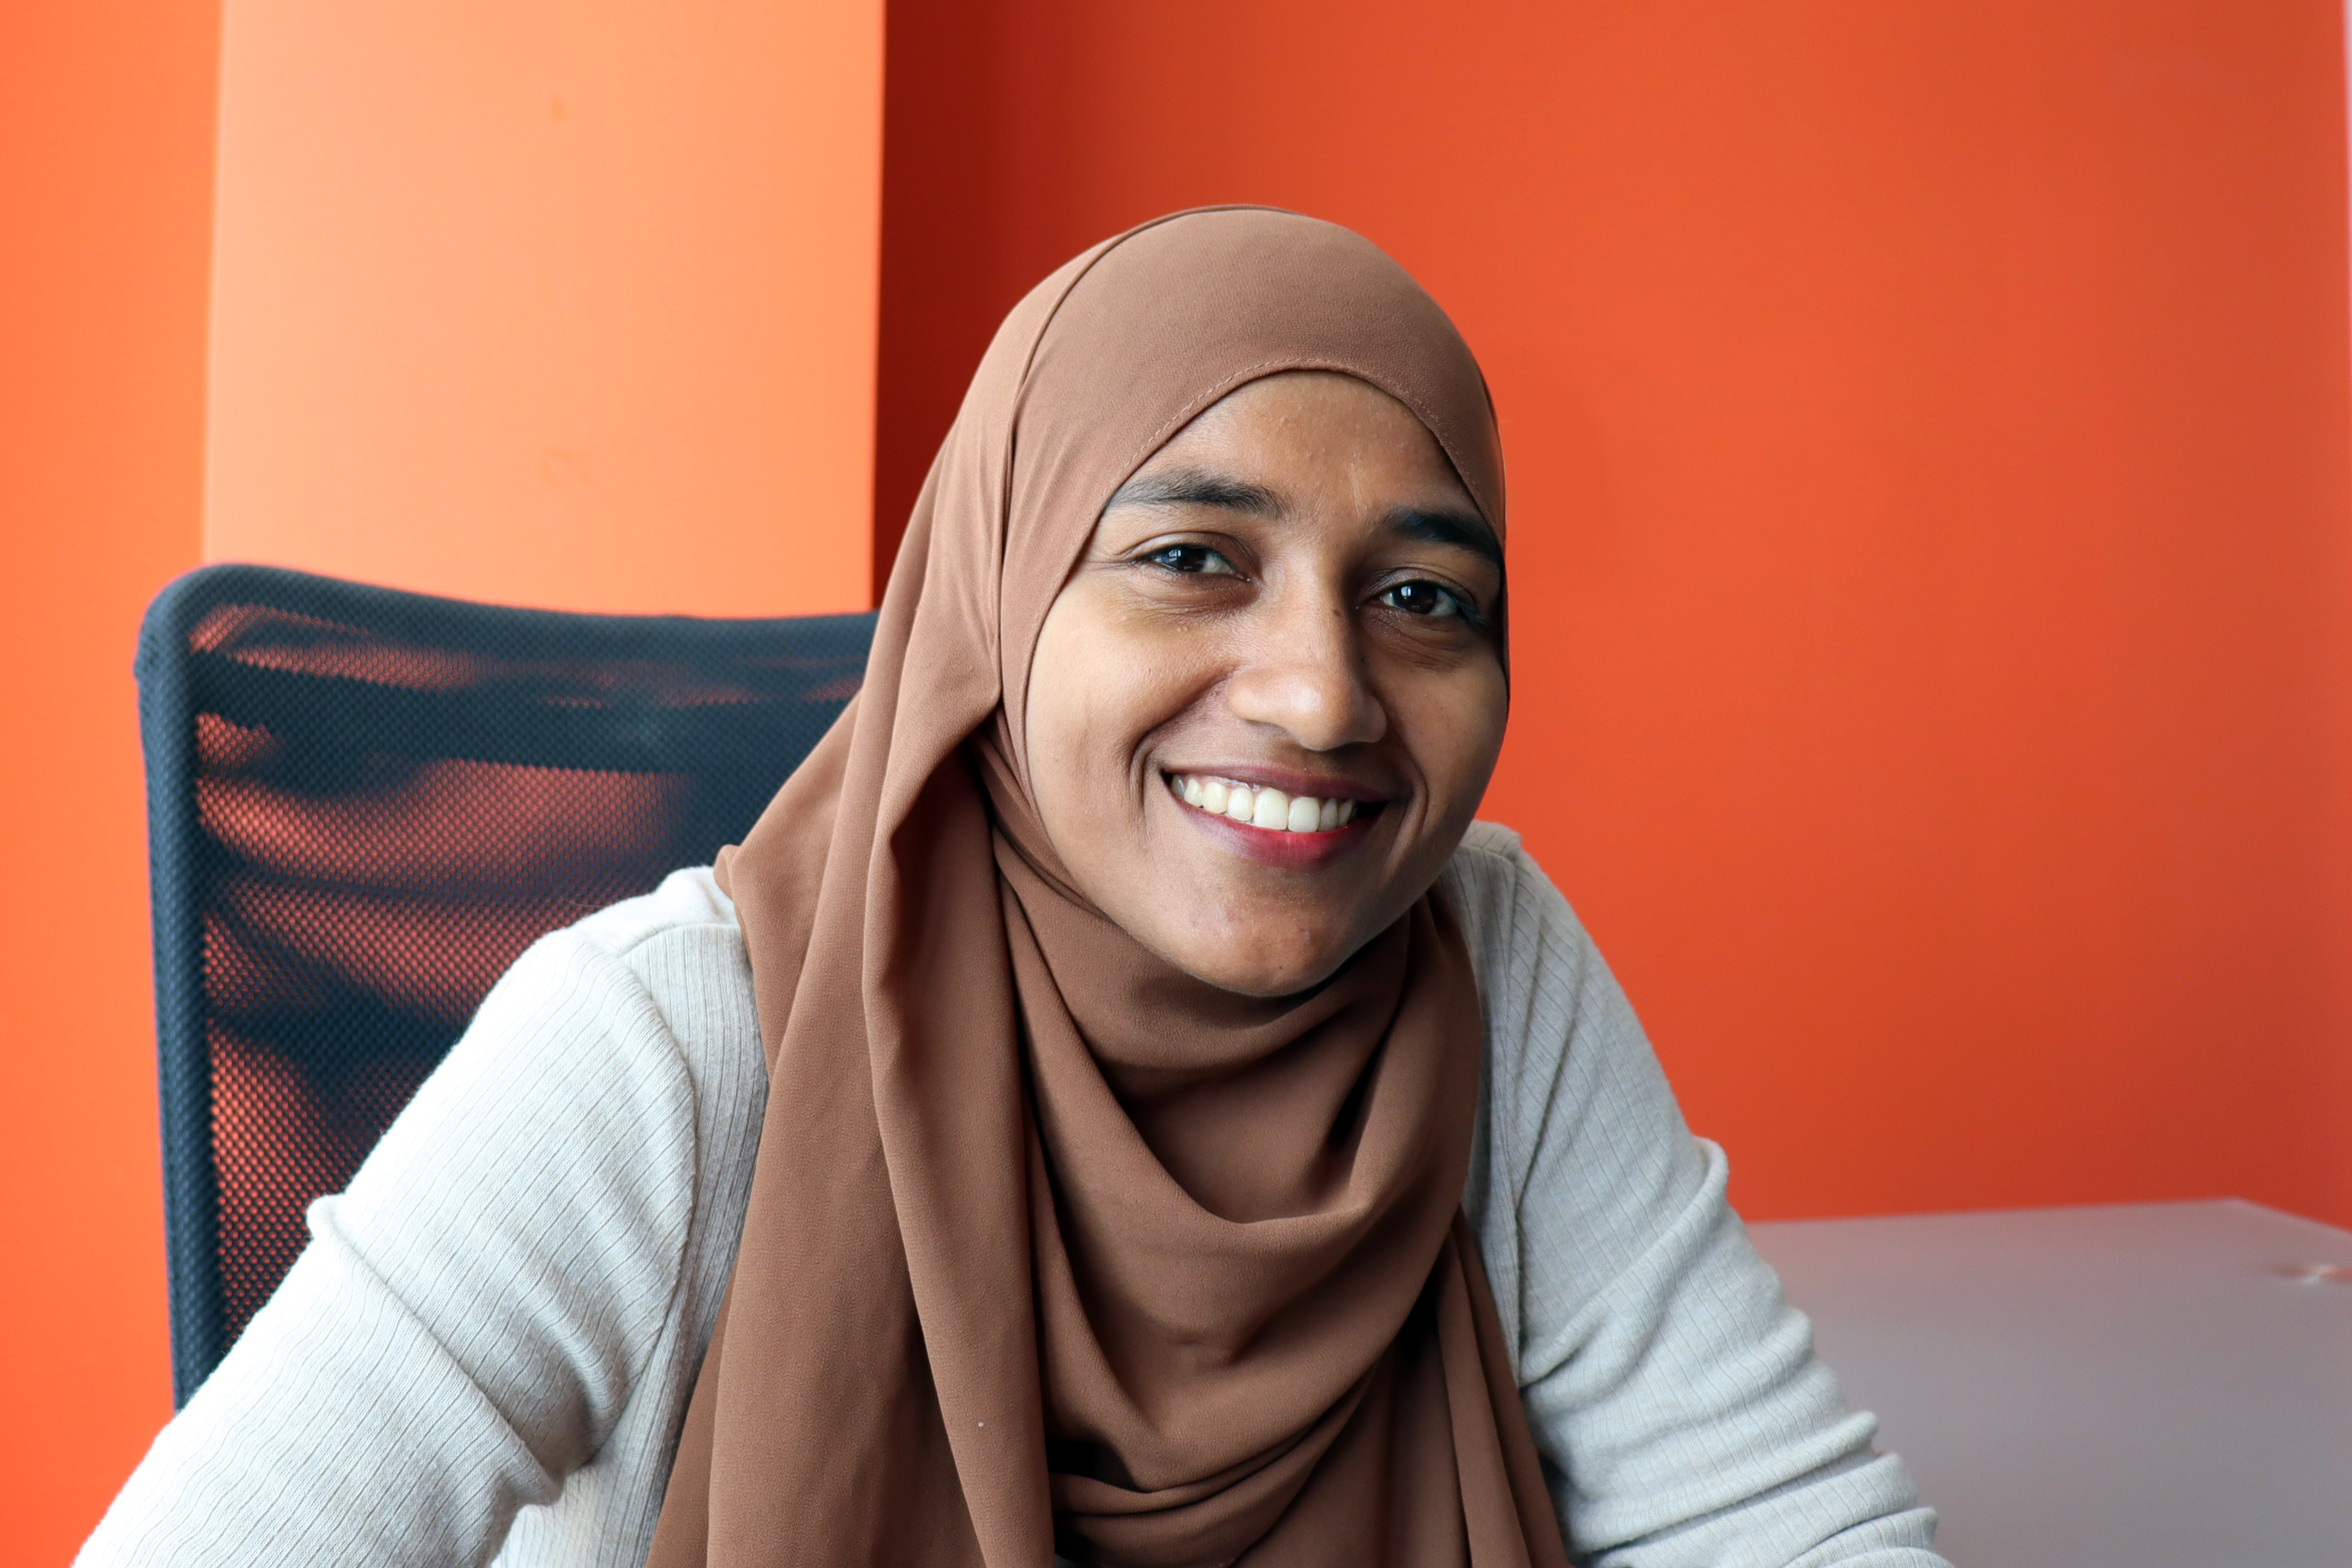 Shaliya smiles as she talks about her future aspirations. © UNFPA Maldives